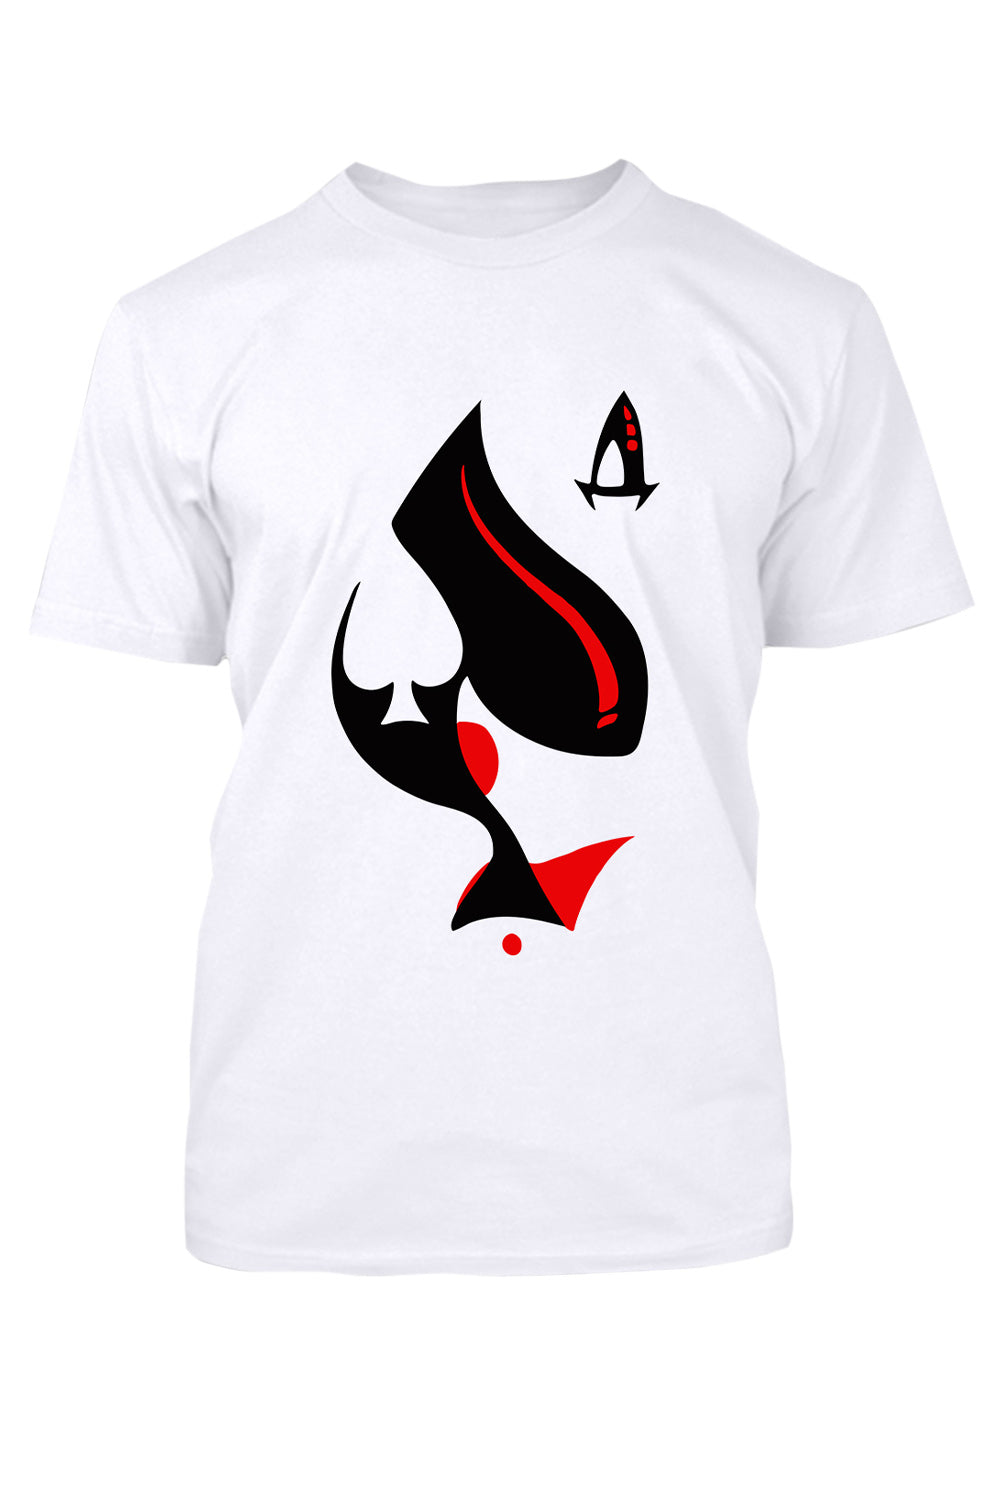 White Poker Card A Graphic Print O-neck Men's T Shirt Men's Tops JT's Designer Fashion